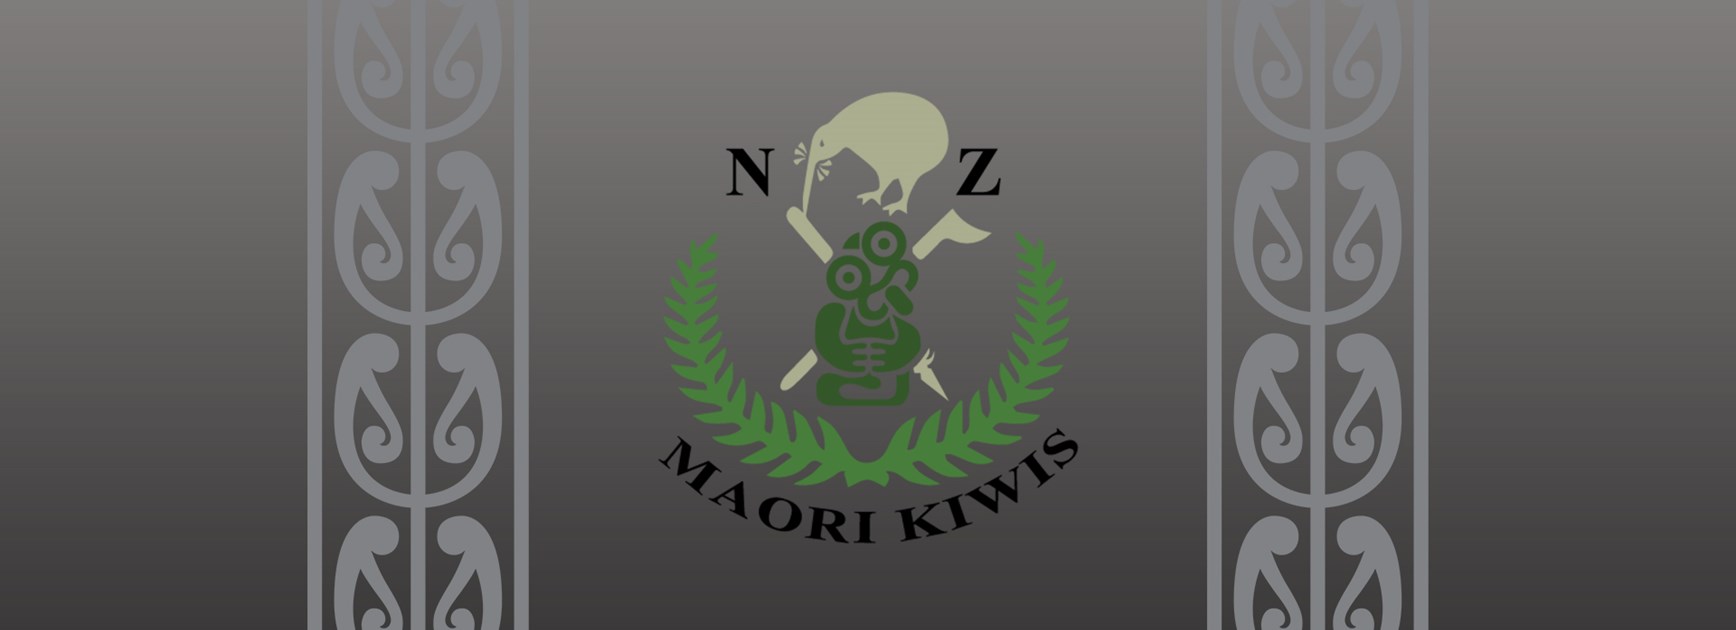 Proctor selected in New Zealand Maori Kiwis